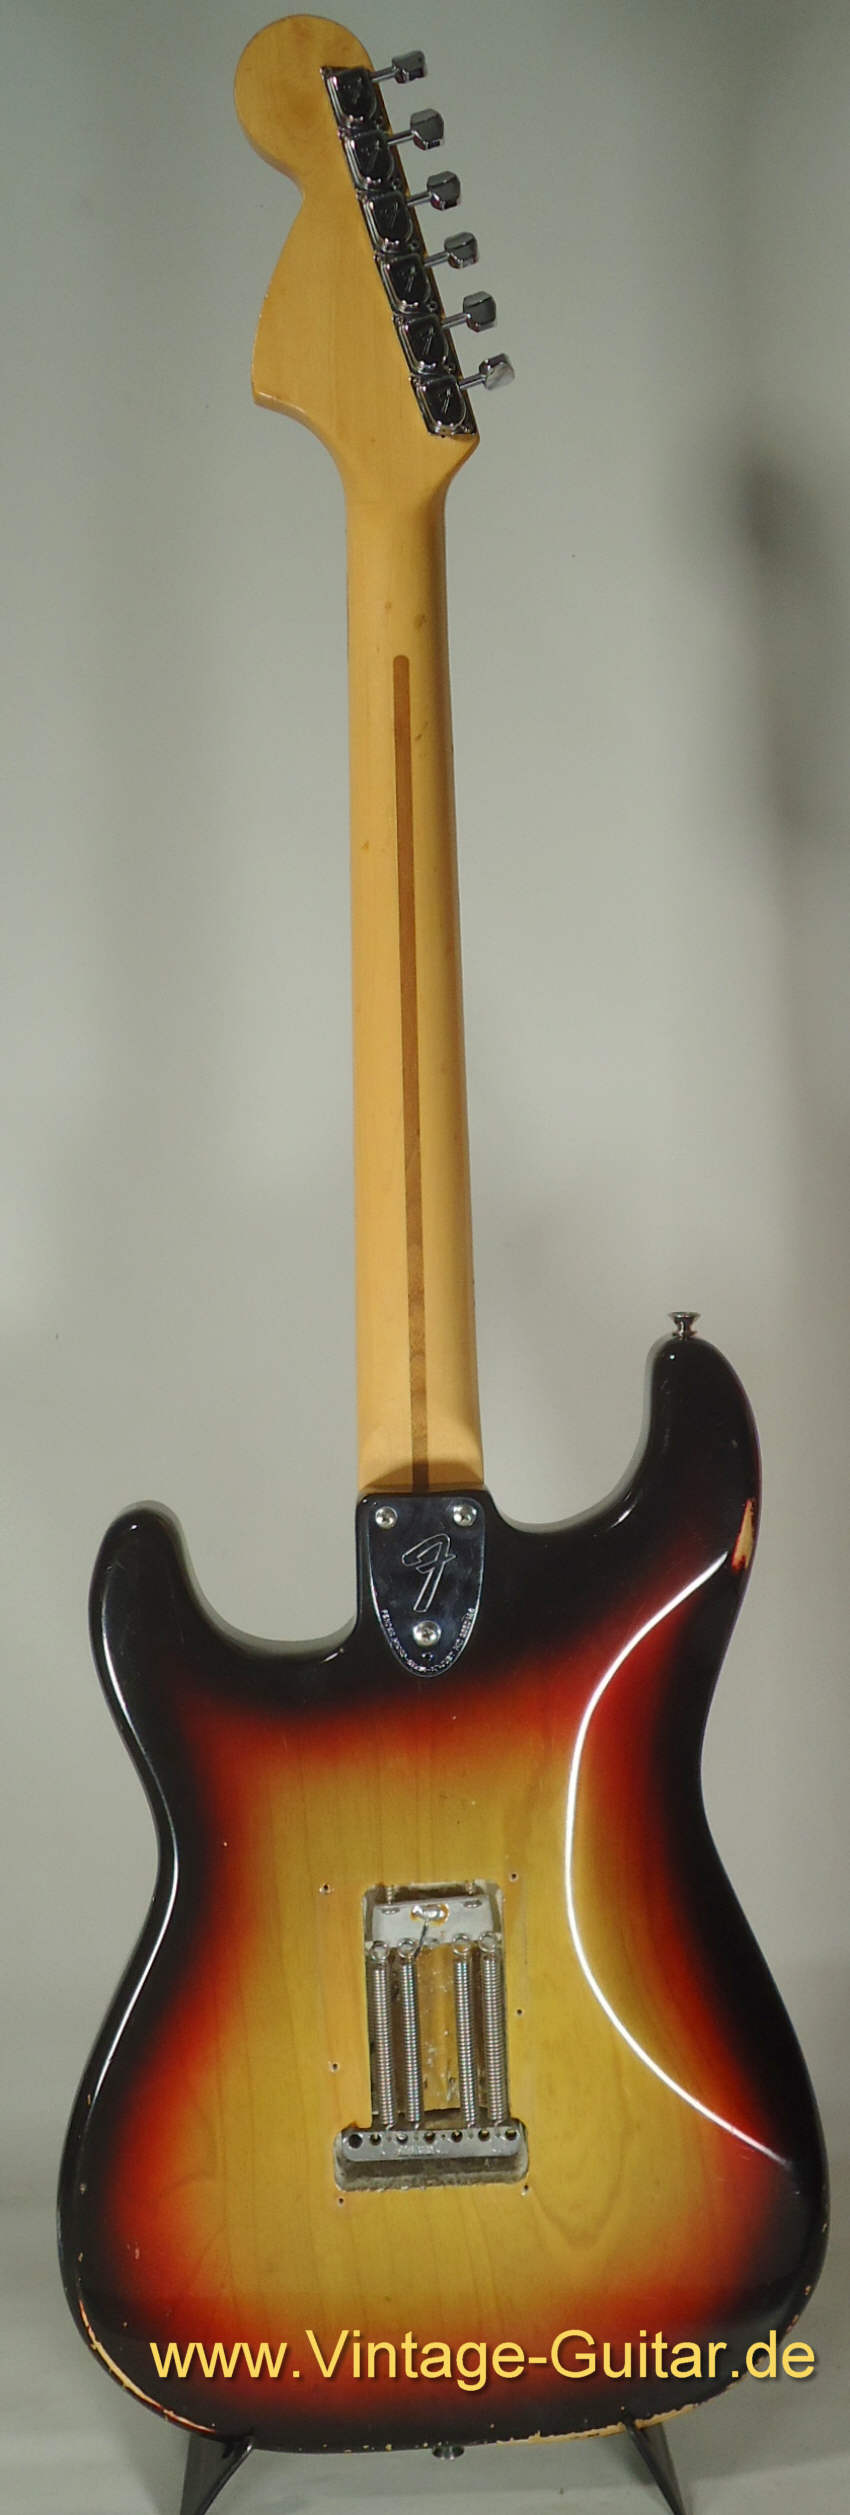 Fender Stratocaster 1976 sunburst white parts b.jpg